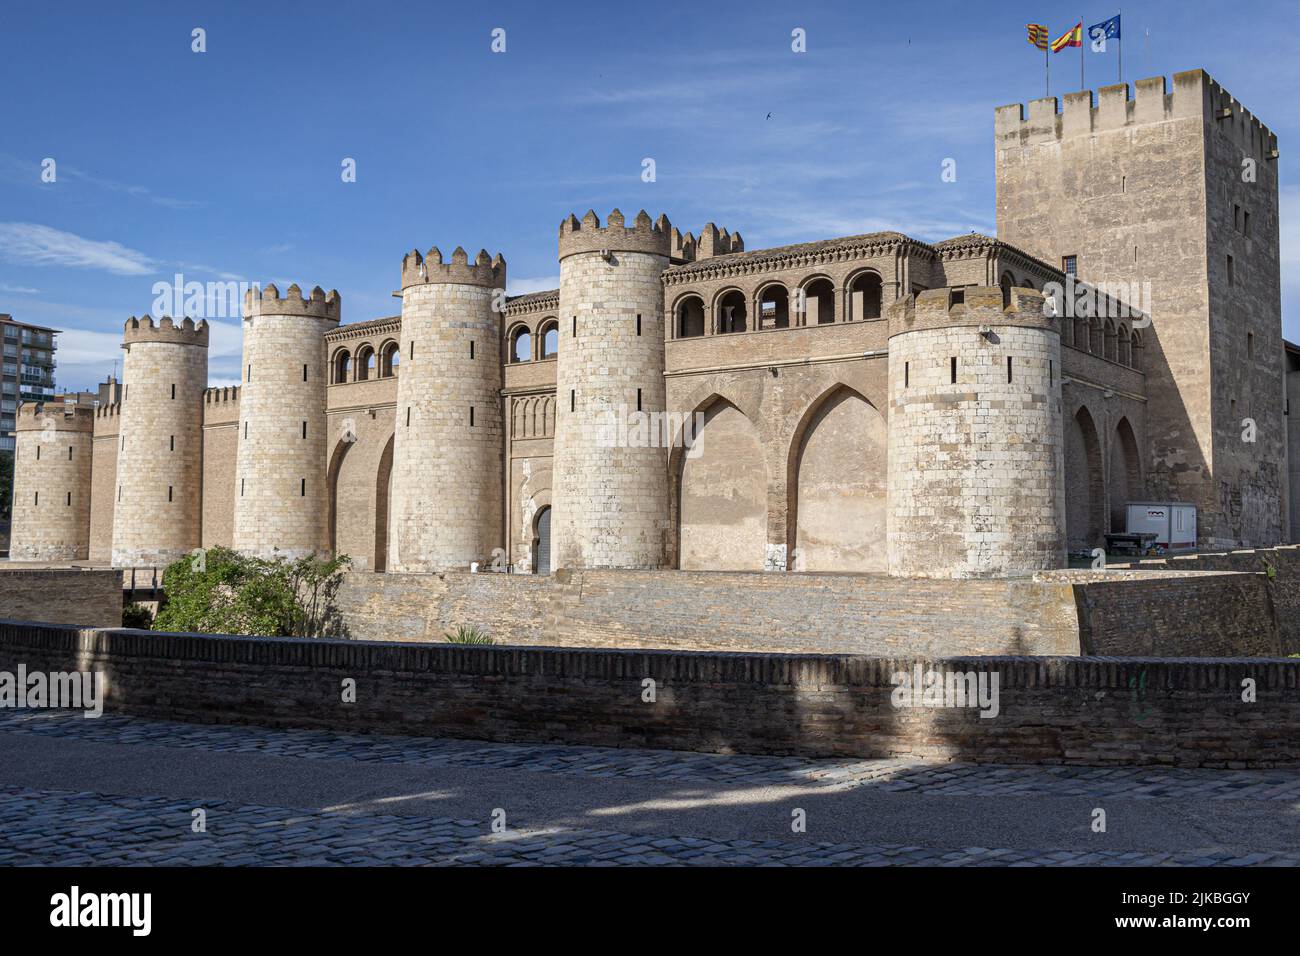 The Aljaferia Palace (Palacio de la Aljaferia), Islamic palace in the Zaragoza city in Aragon region, Spain Stock Photo